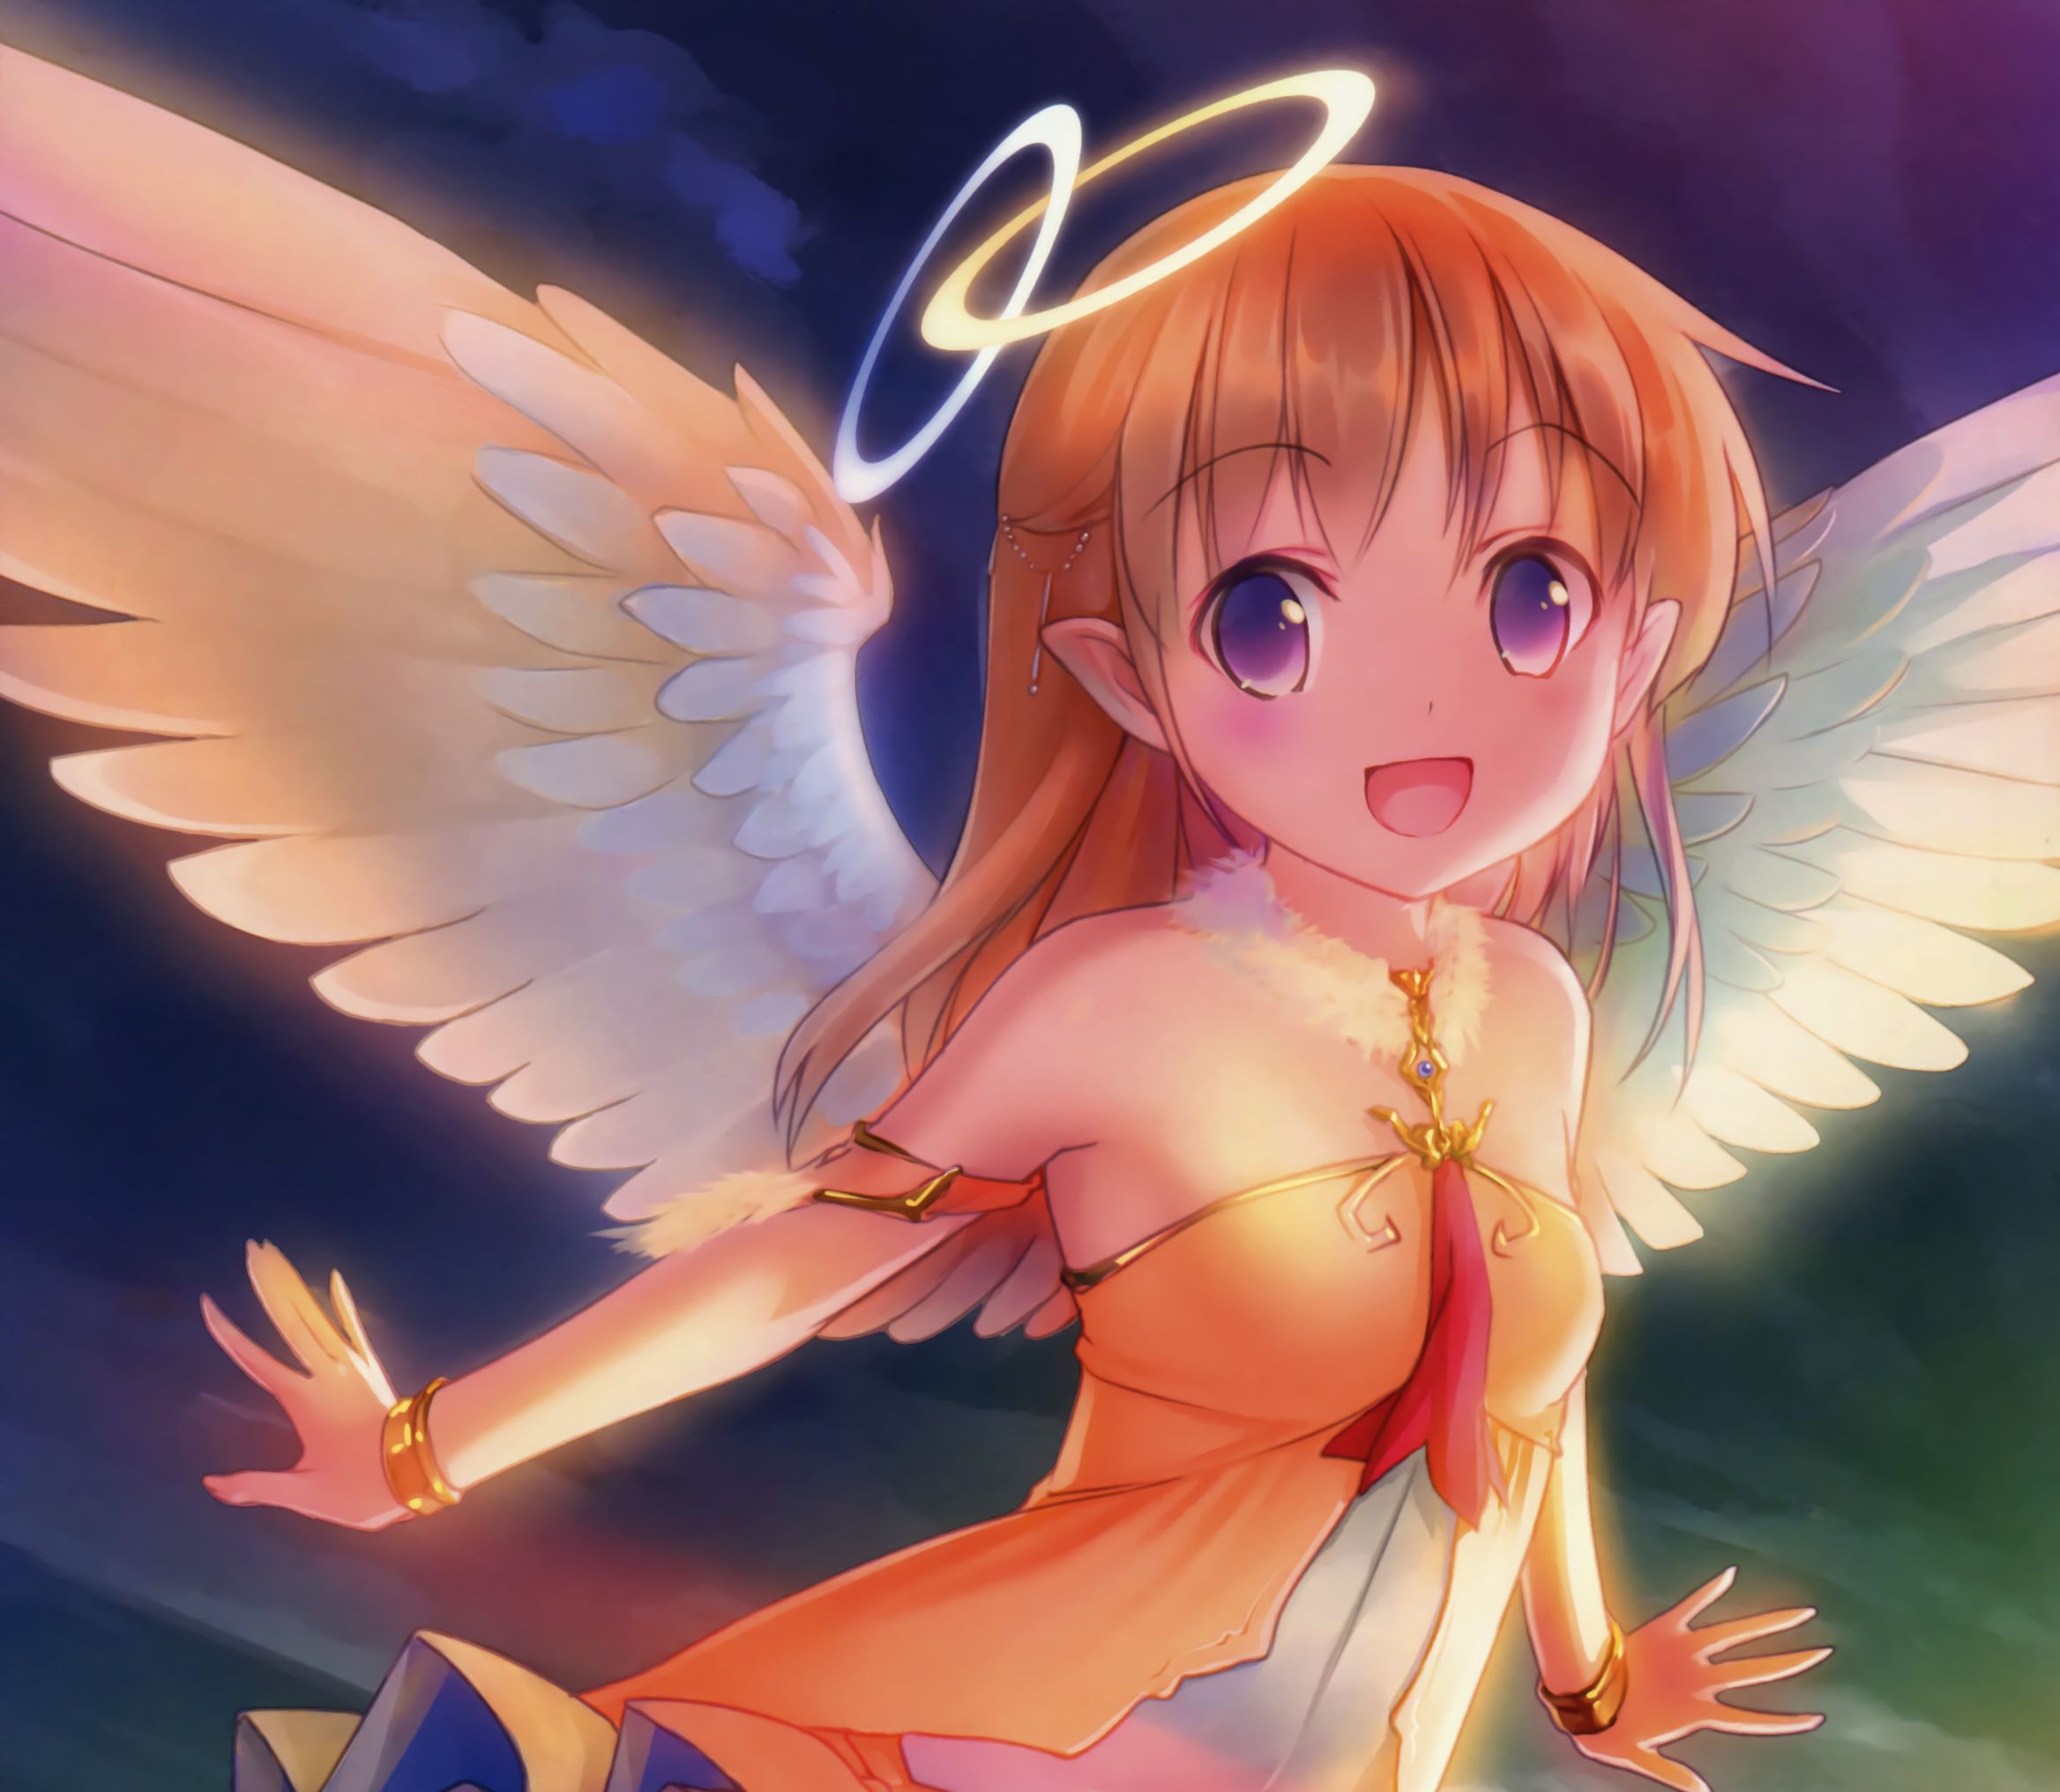 Papel de parede : 2560x1600 px, anjo, Anime, Meninas anime